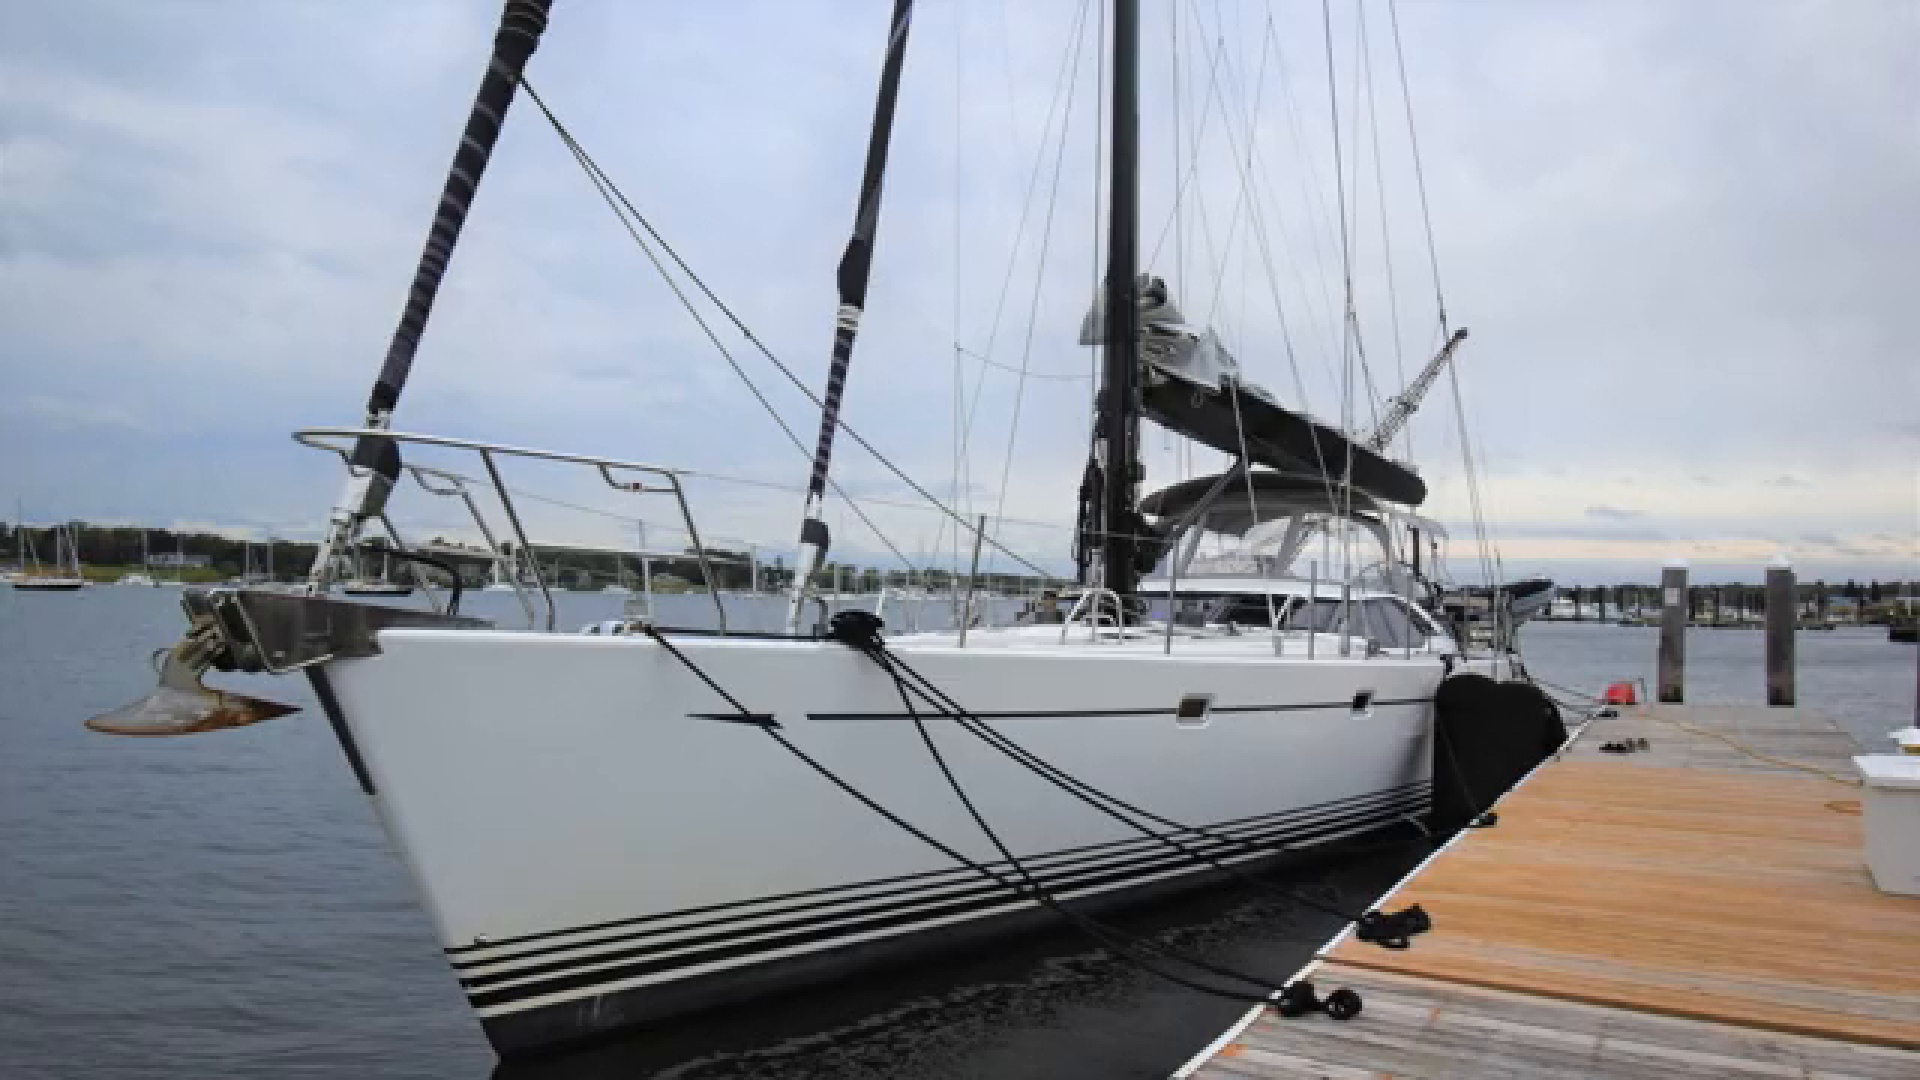 72 foot yacht